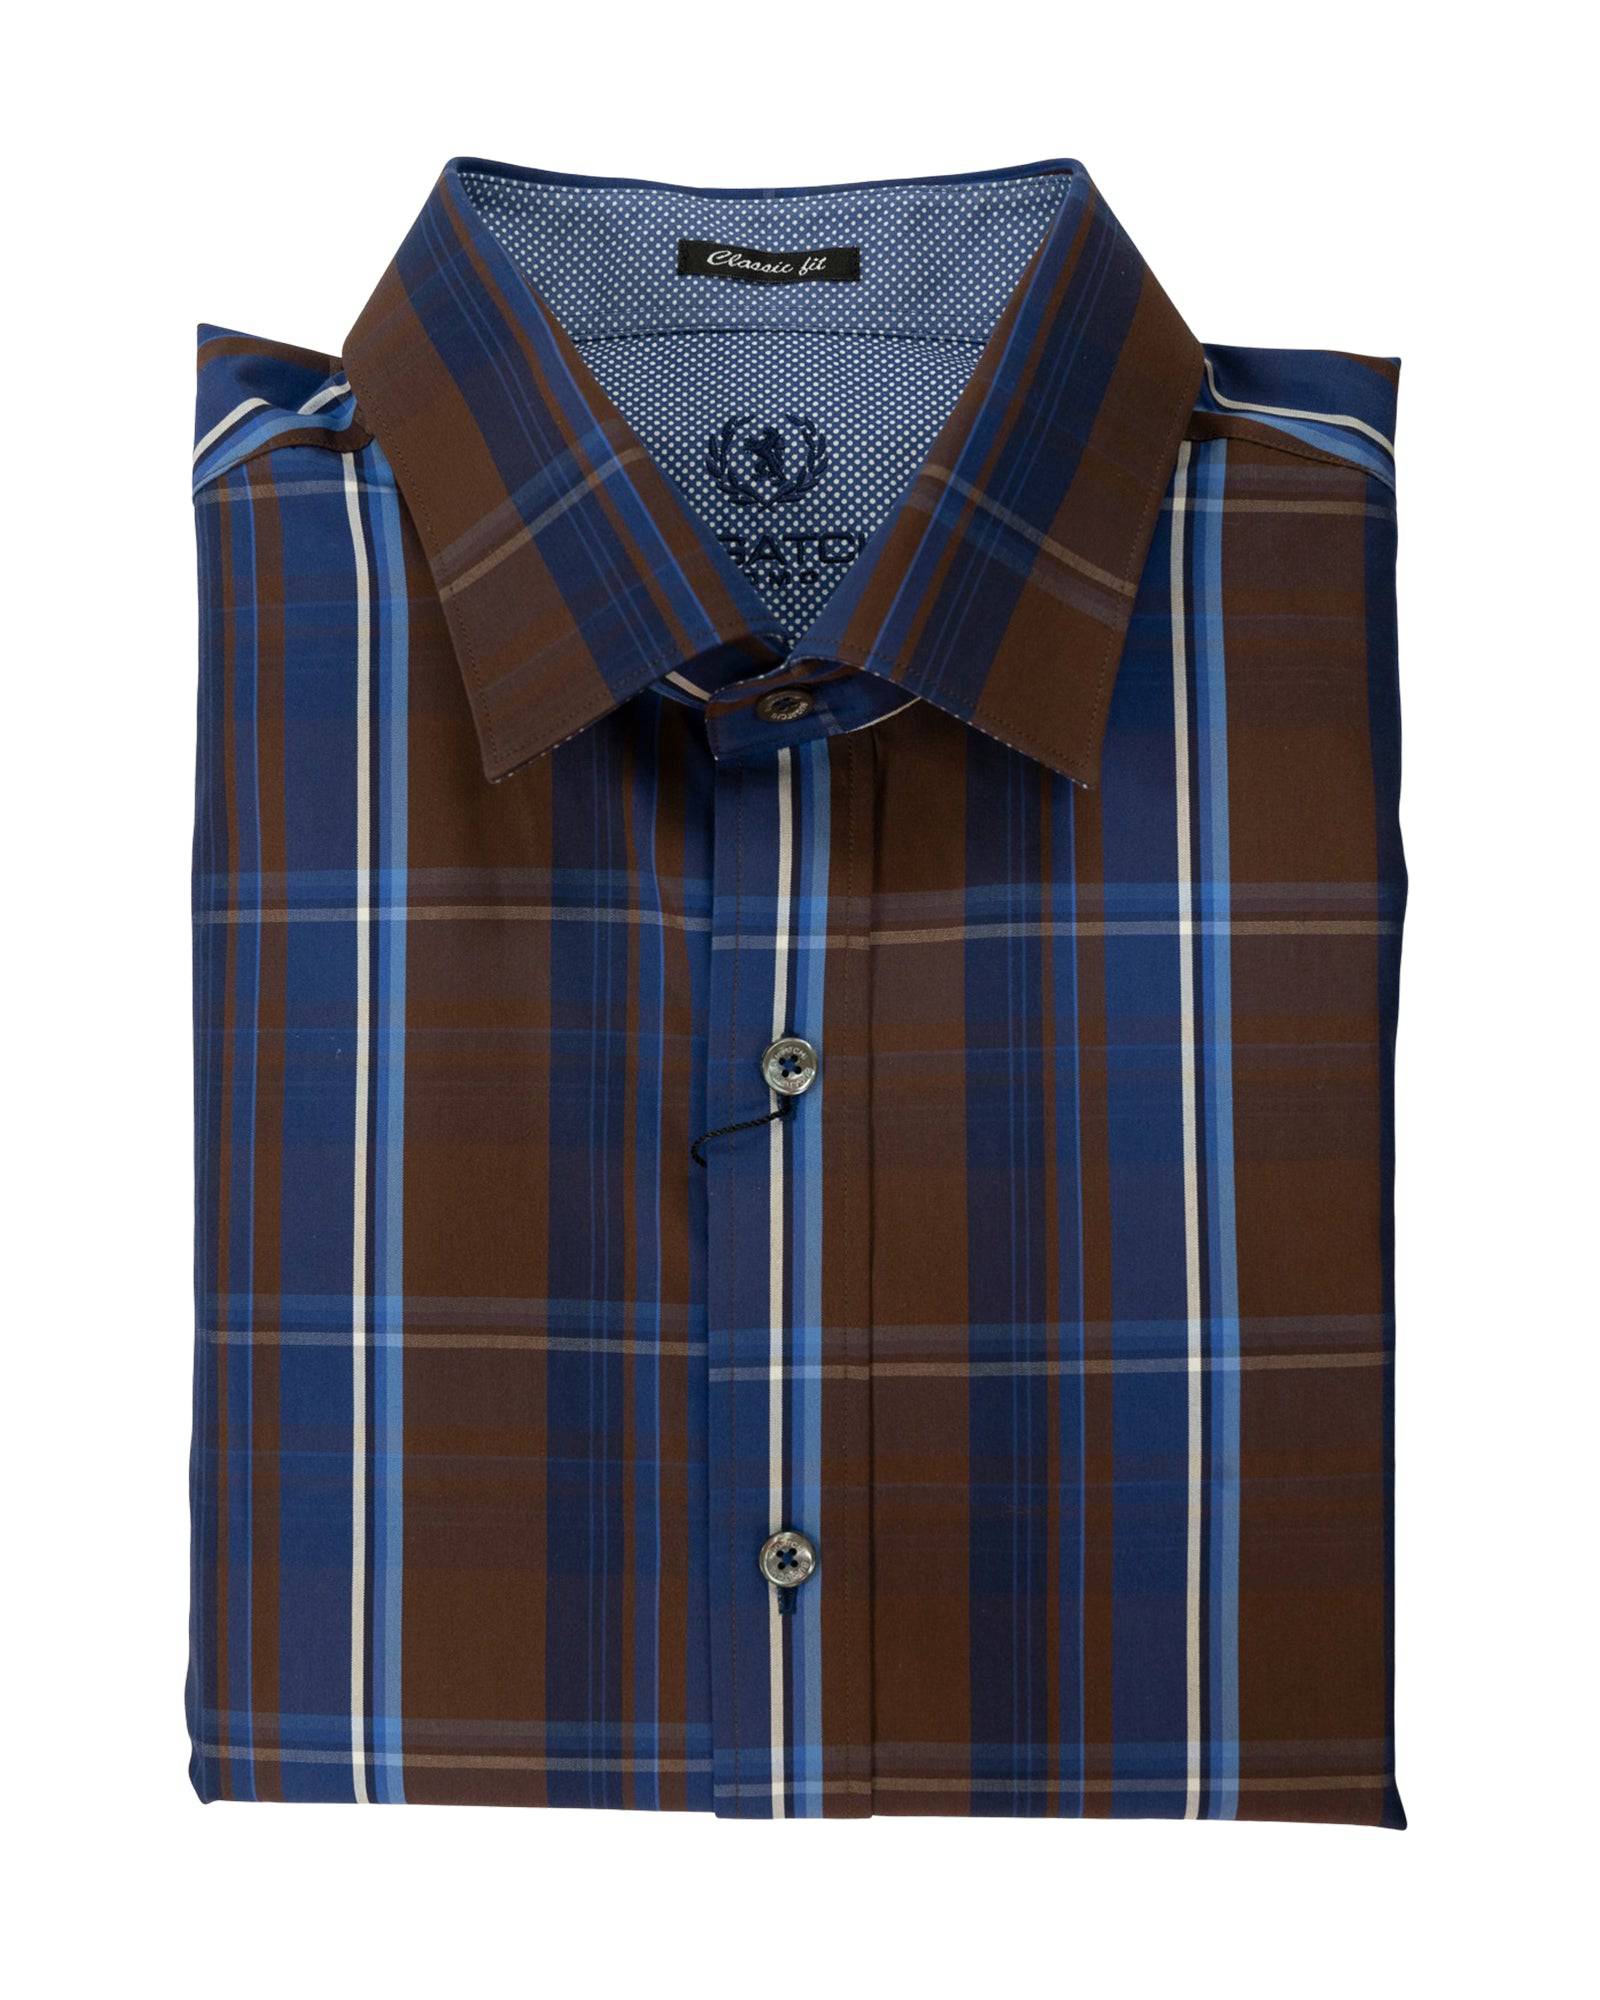 Bugatchi Chocolate & Navy Plaid Sport Shirt - Rainwater's Men's Clothing and Tuxedo Rental